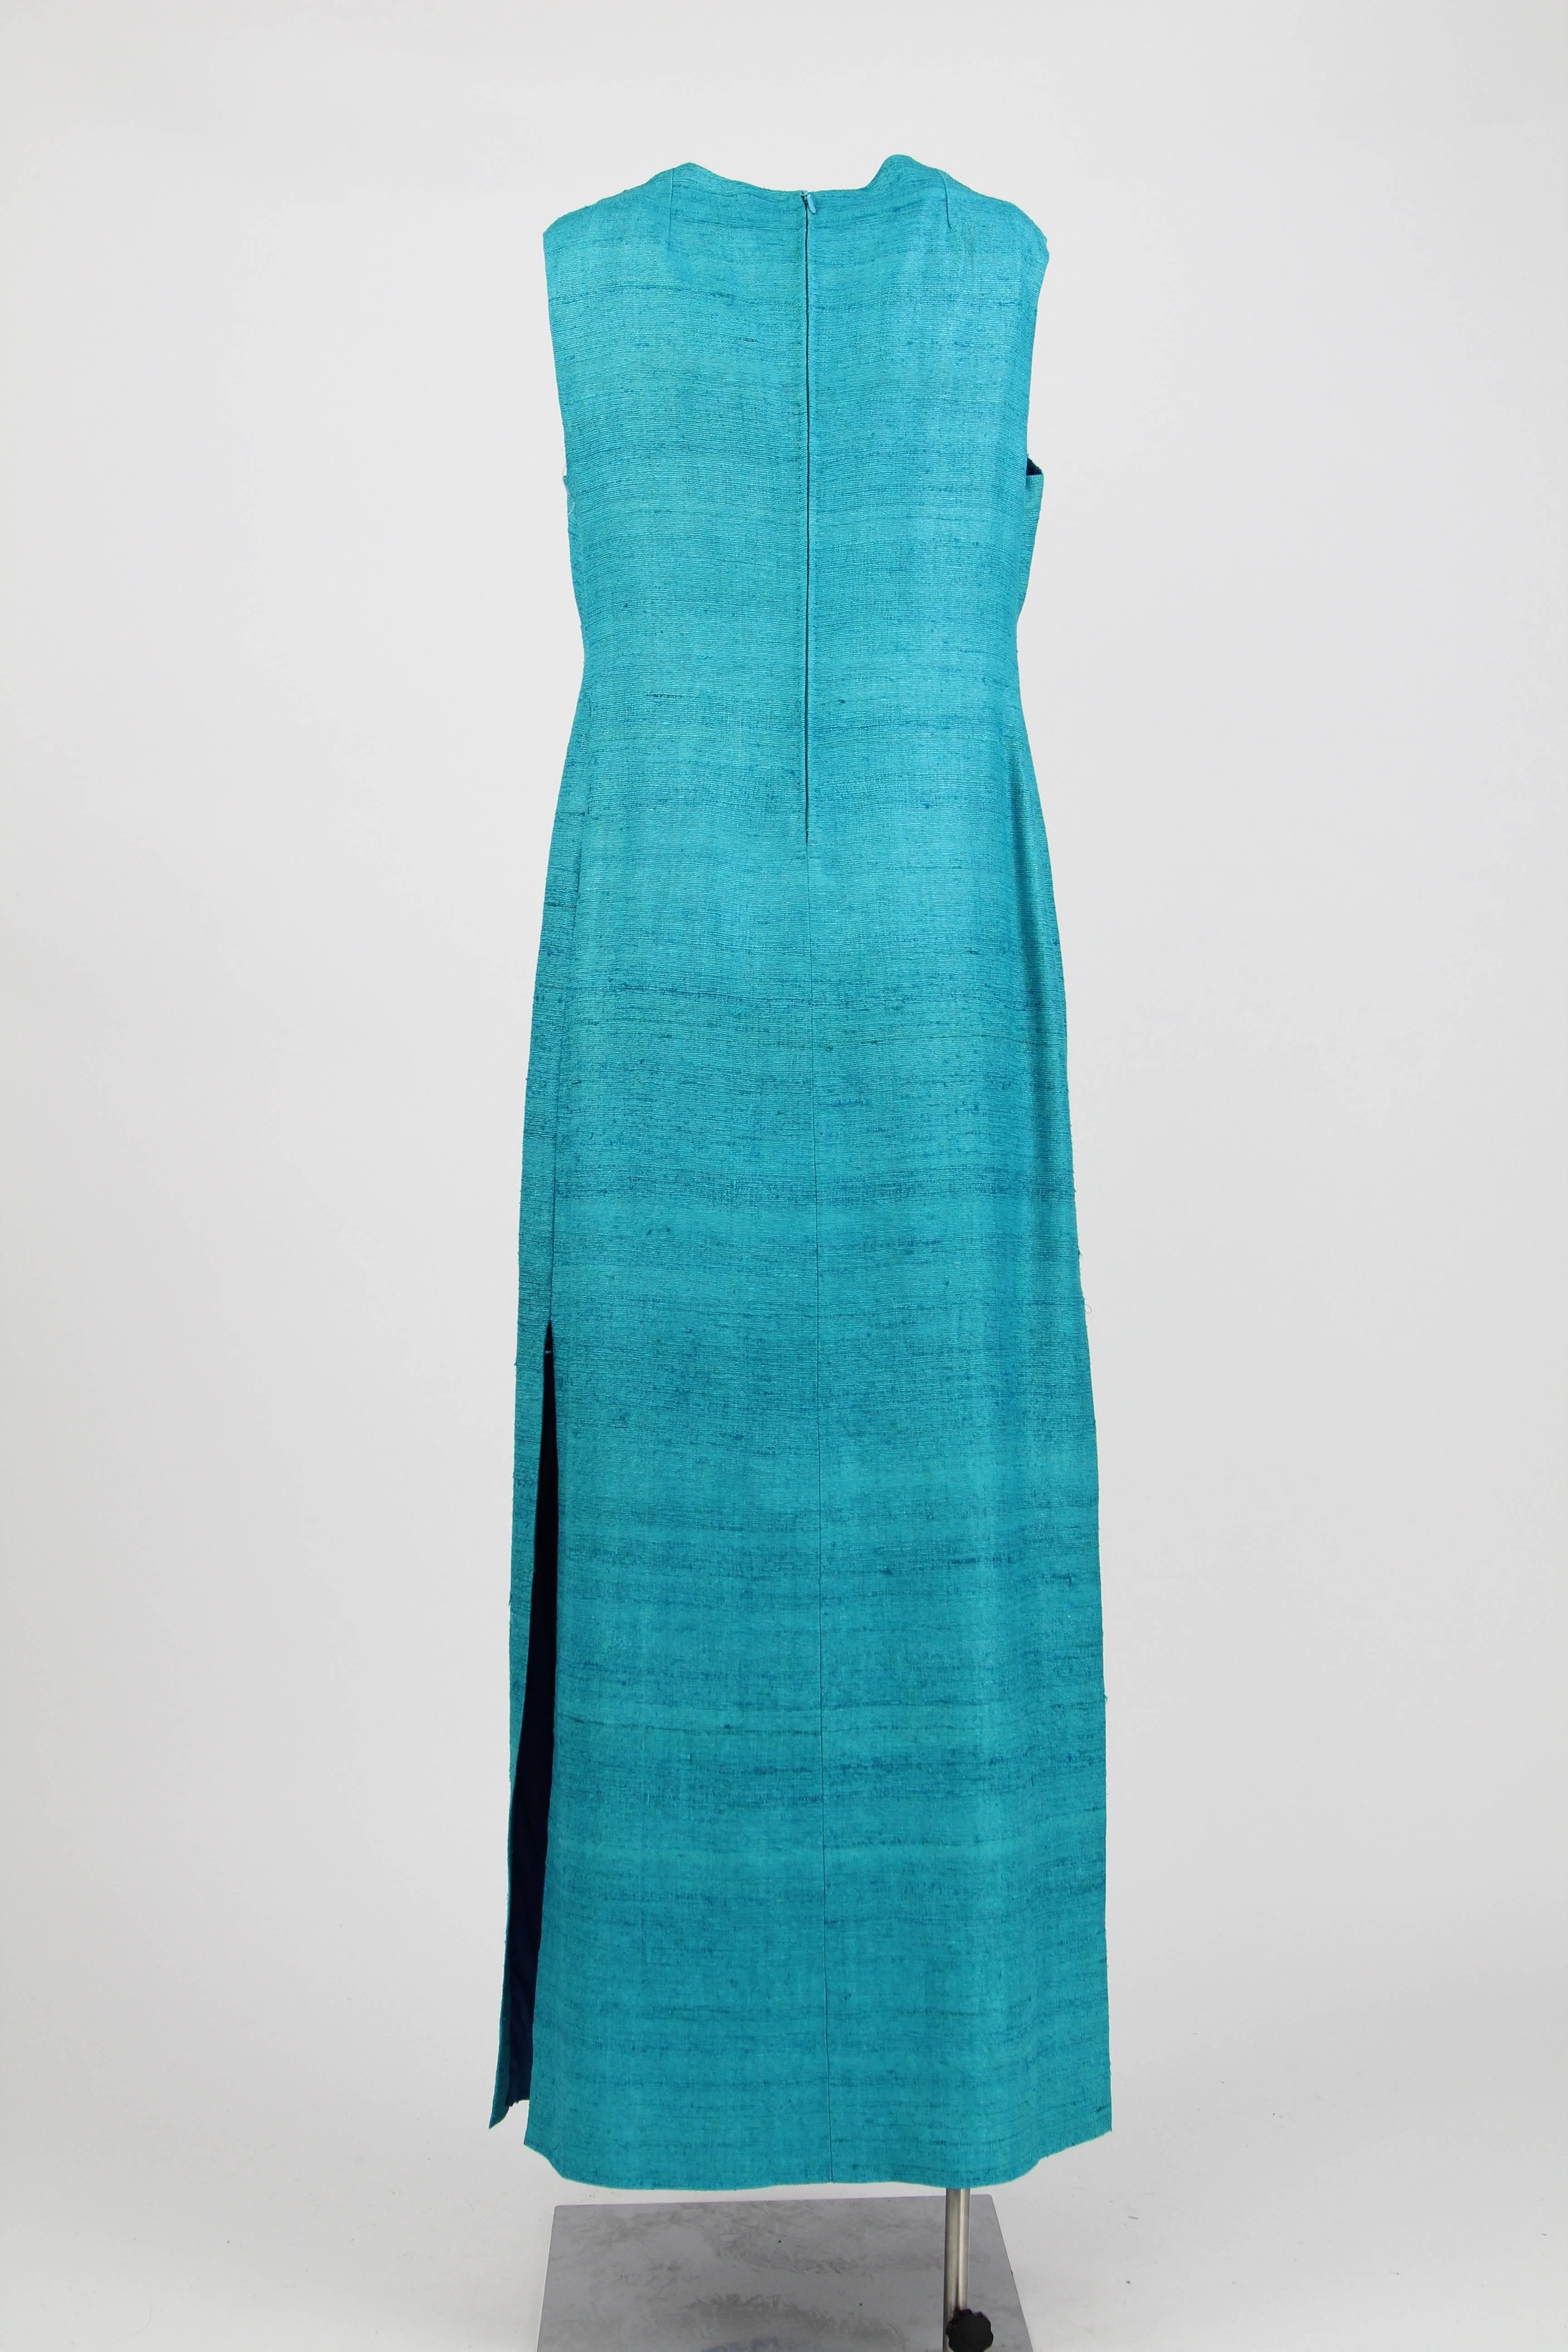 Blue Artisanal Italian Dress